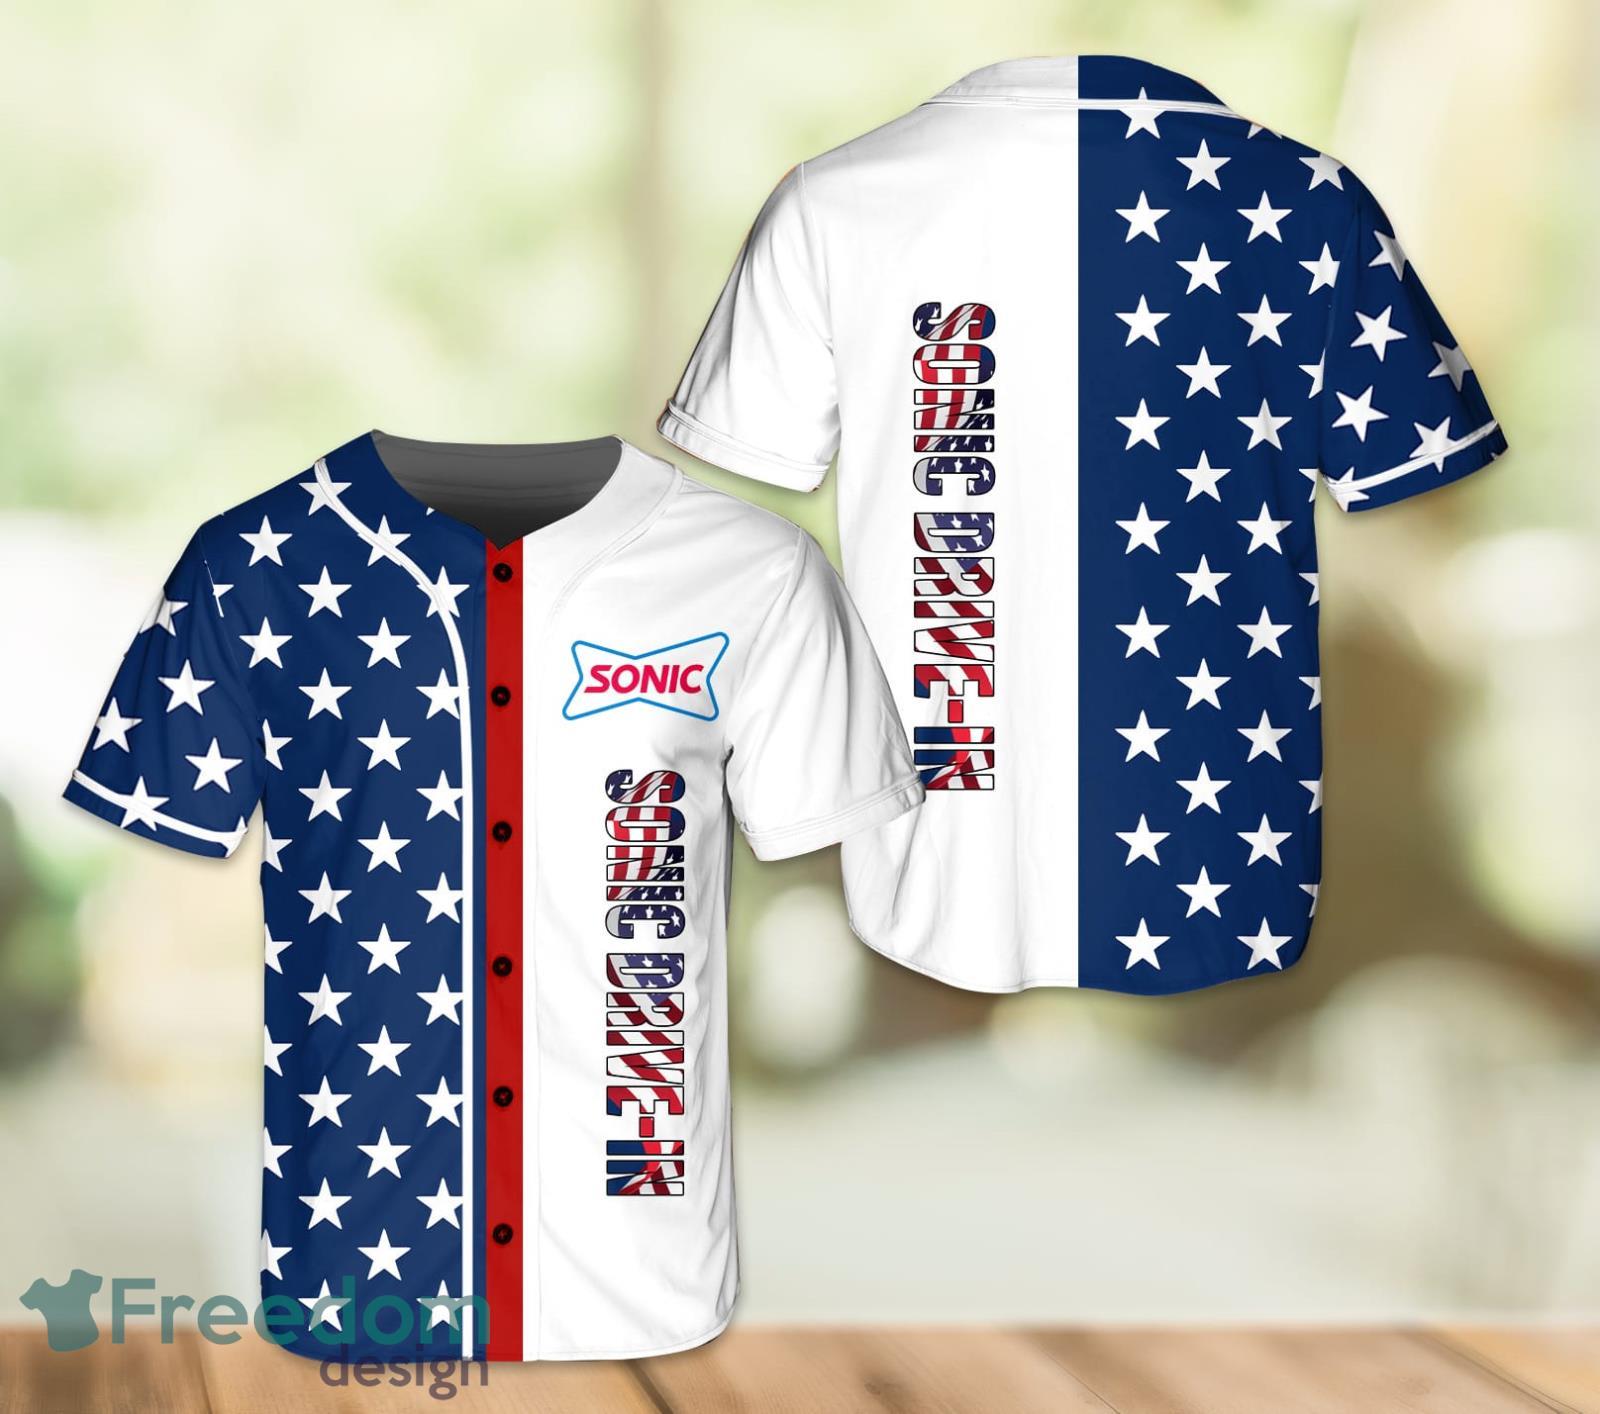 Subway Fastfood Idea Baseball Jersey Shirt Best Gift For Men And Women -  Freedomdesign